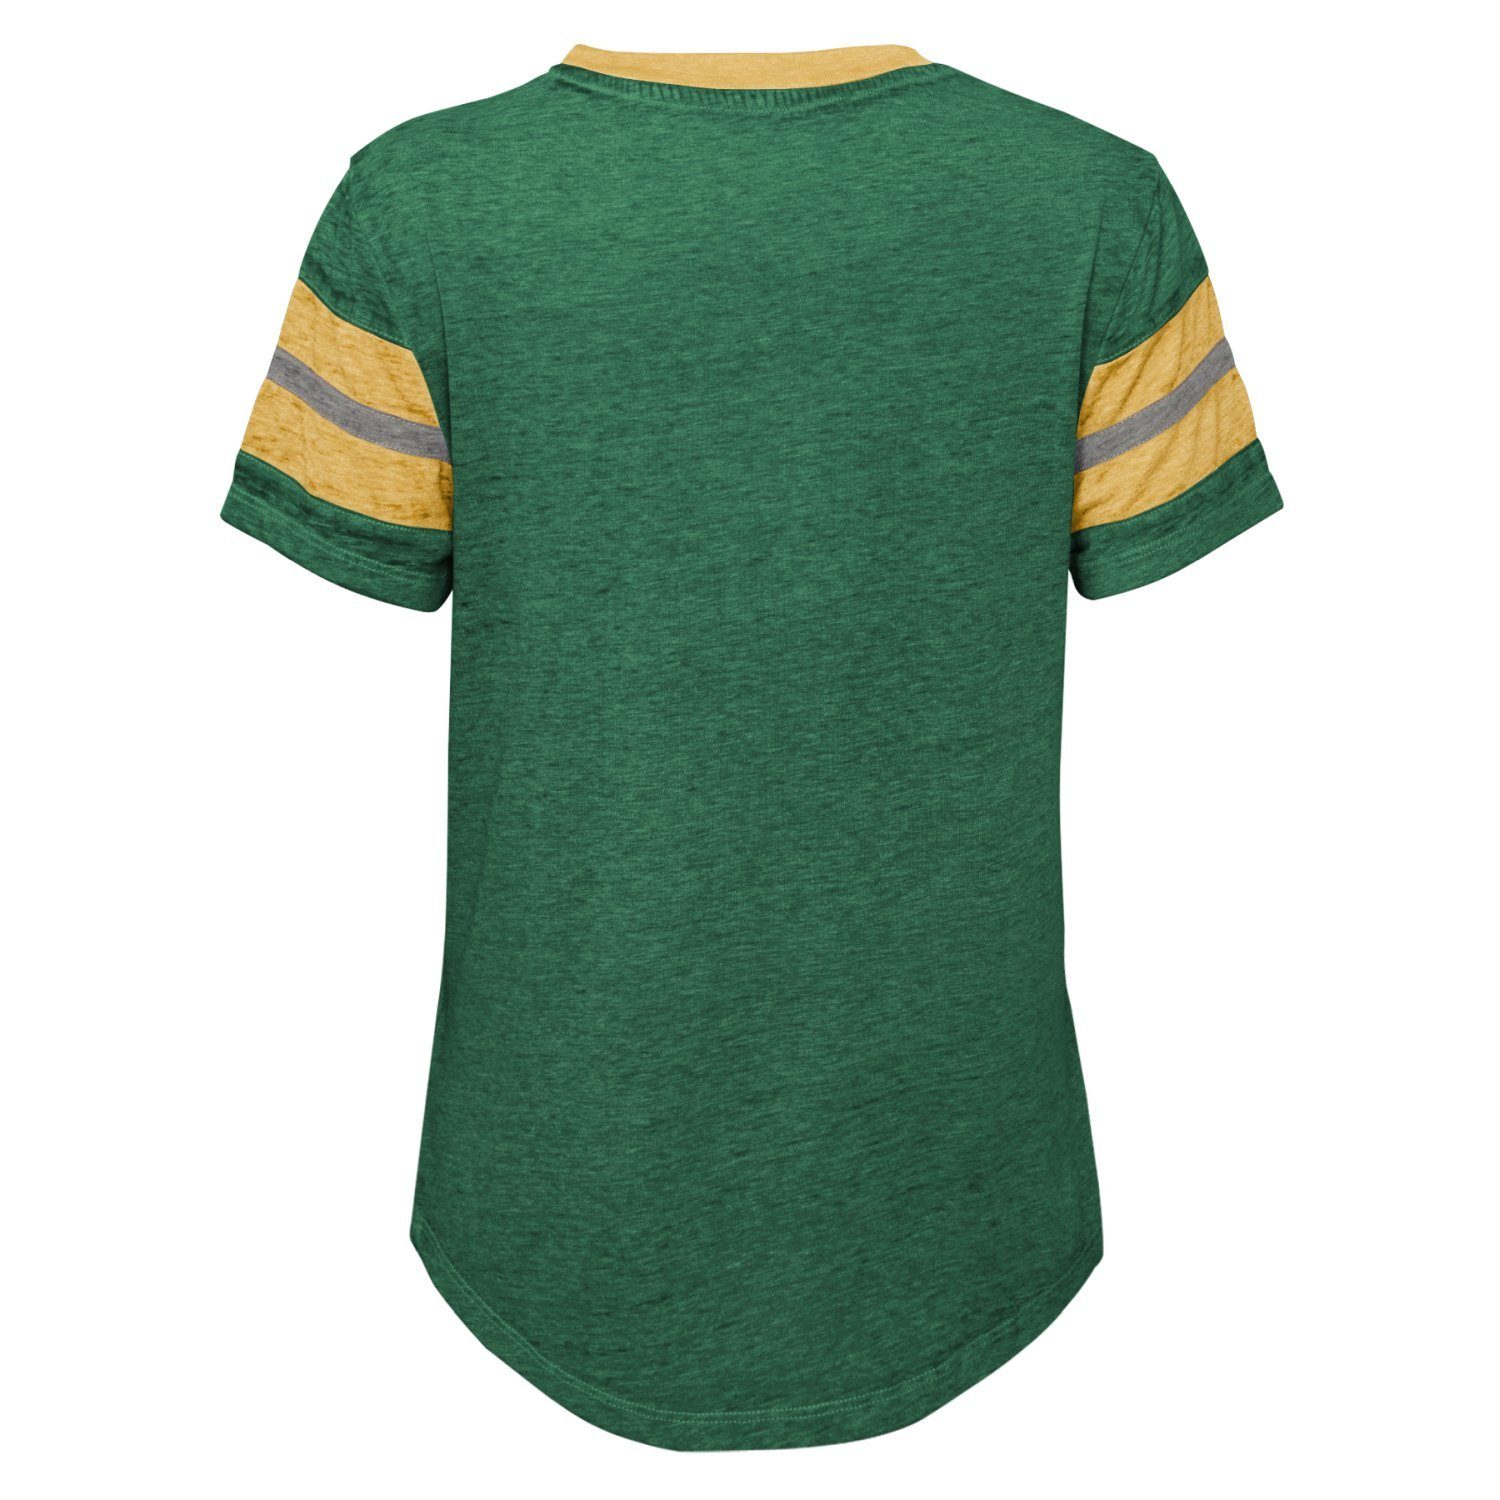 Green Outerstuff Packers Print-Shirt Outerstuff Bay WAVE NFL